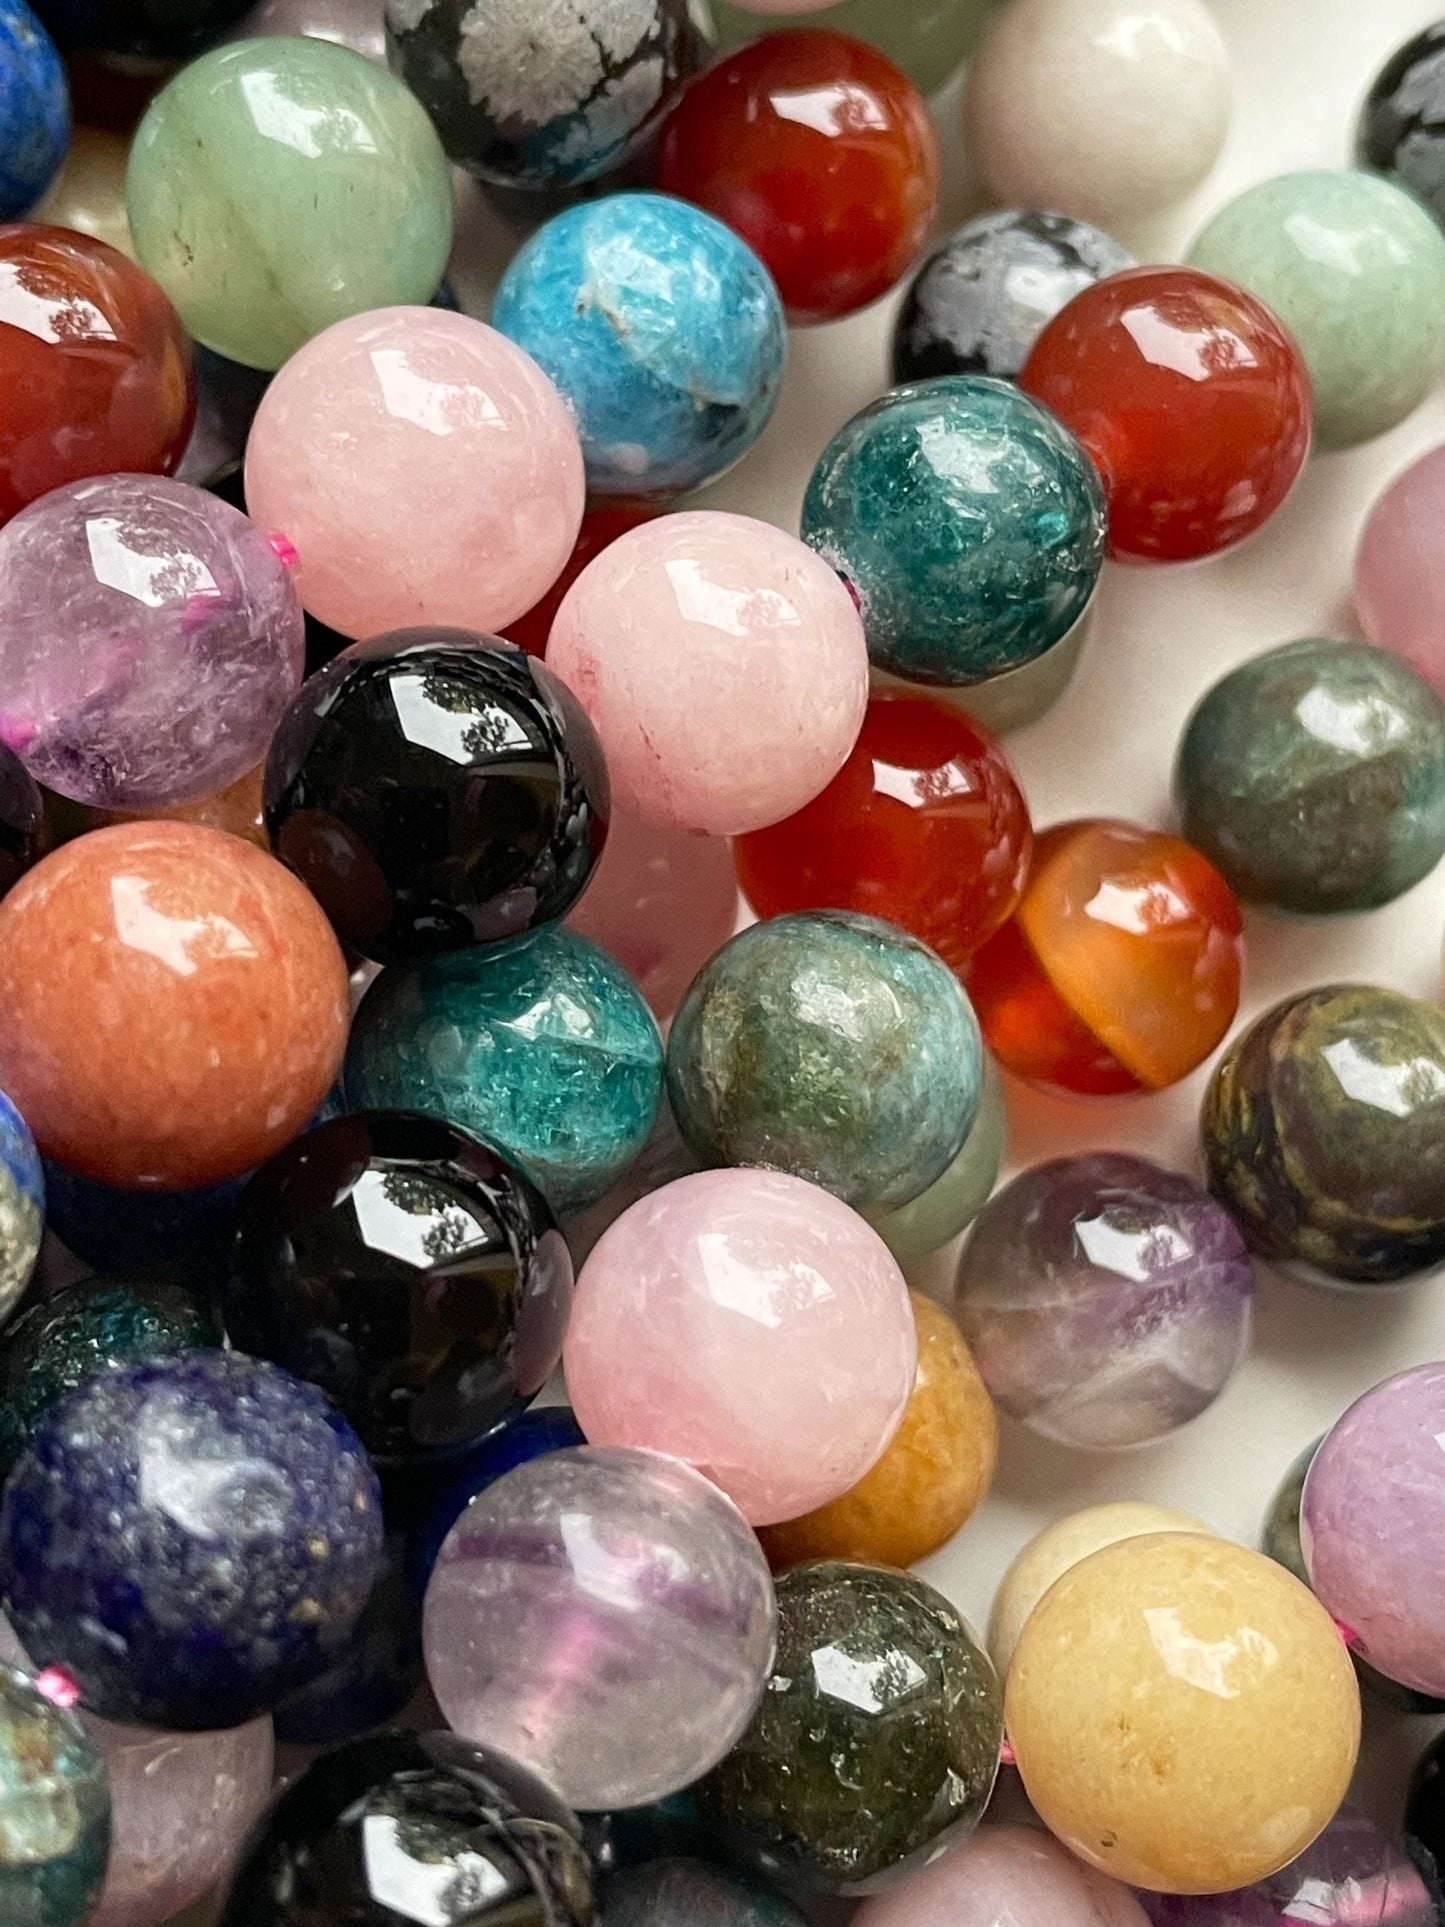 Natural Mixed Multi Gemstone Beads 6mm 8mm 10mm Round Bead, Natural Multicolor Mixed Gemstones Beads, Full Strand 15.5"